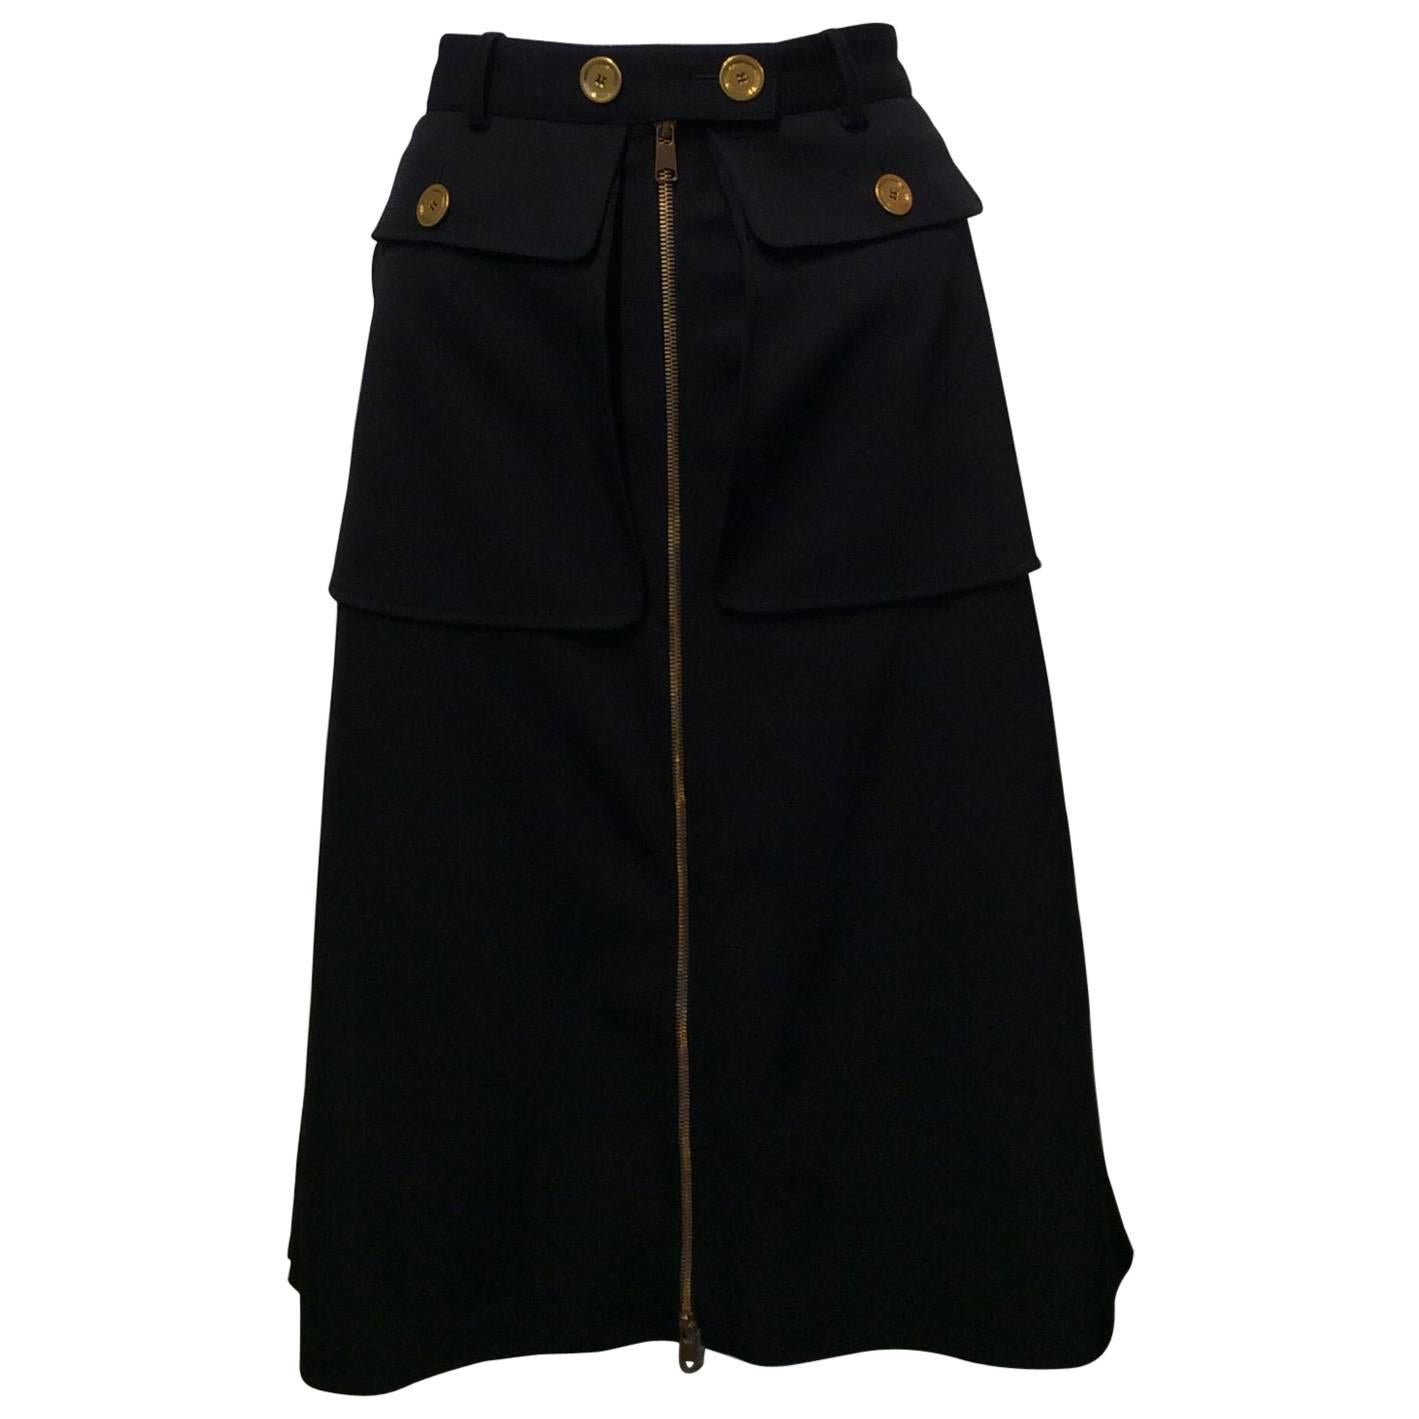 Black Alexander McQueen Skirt w/ Gold Buttons and Full Zippered Front Sz44(Us 8)